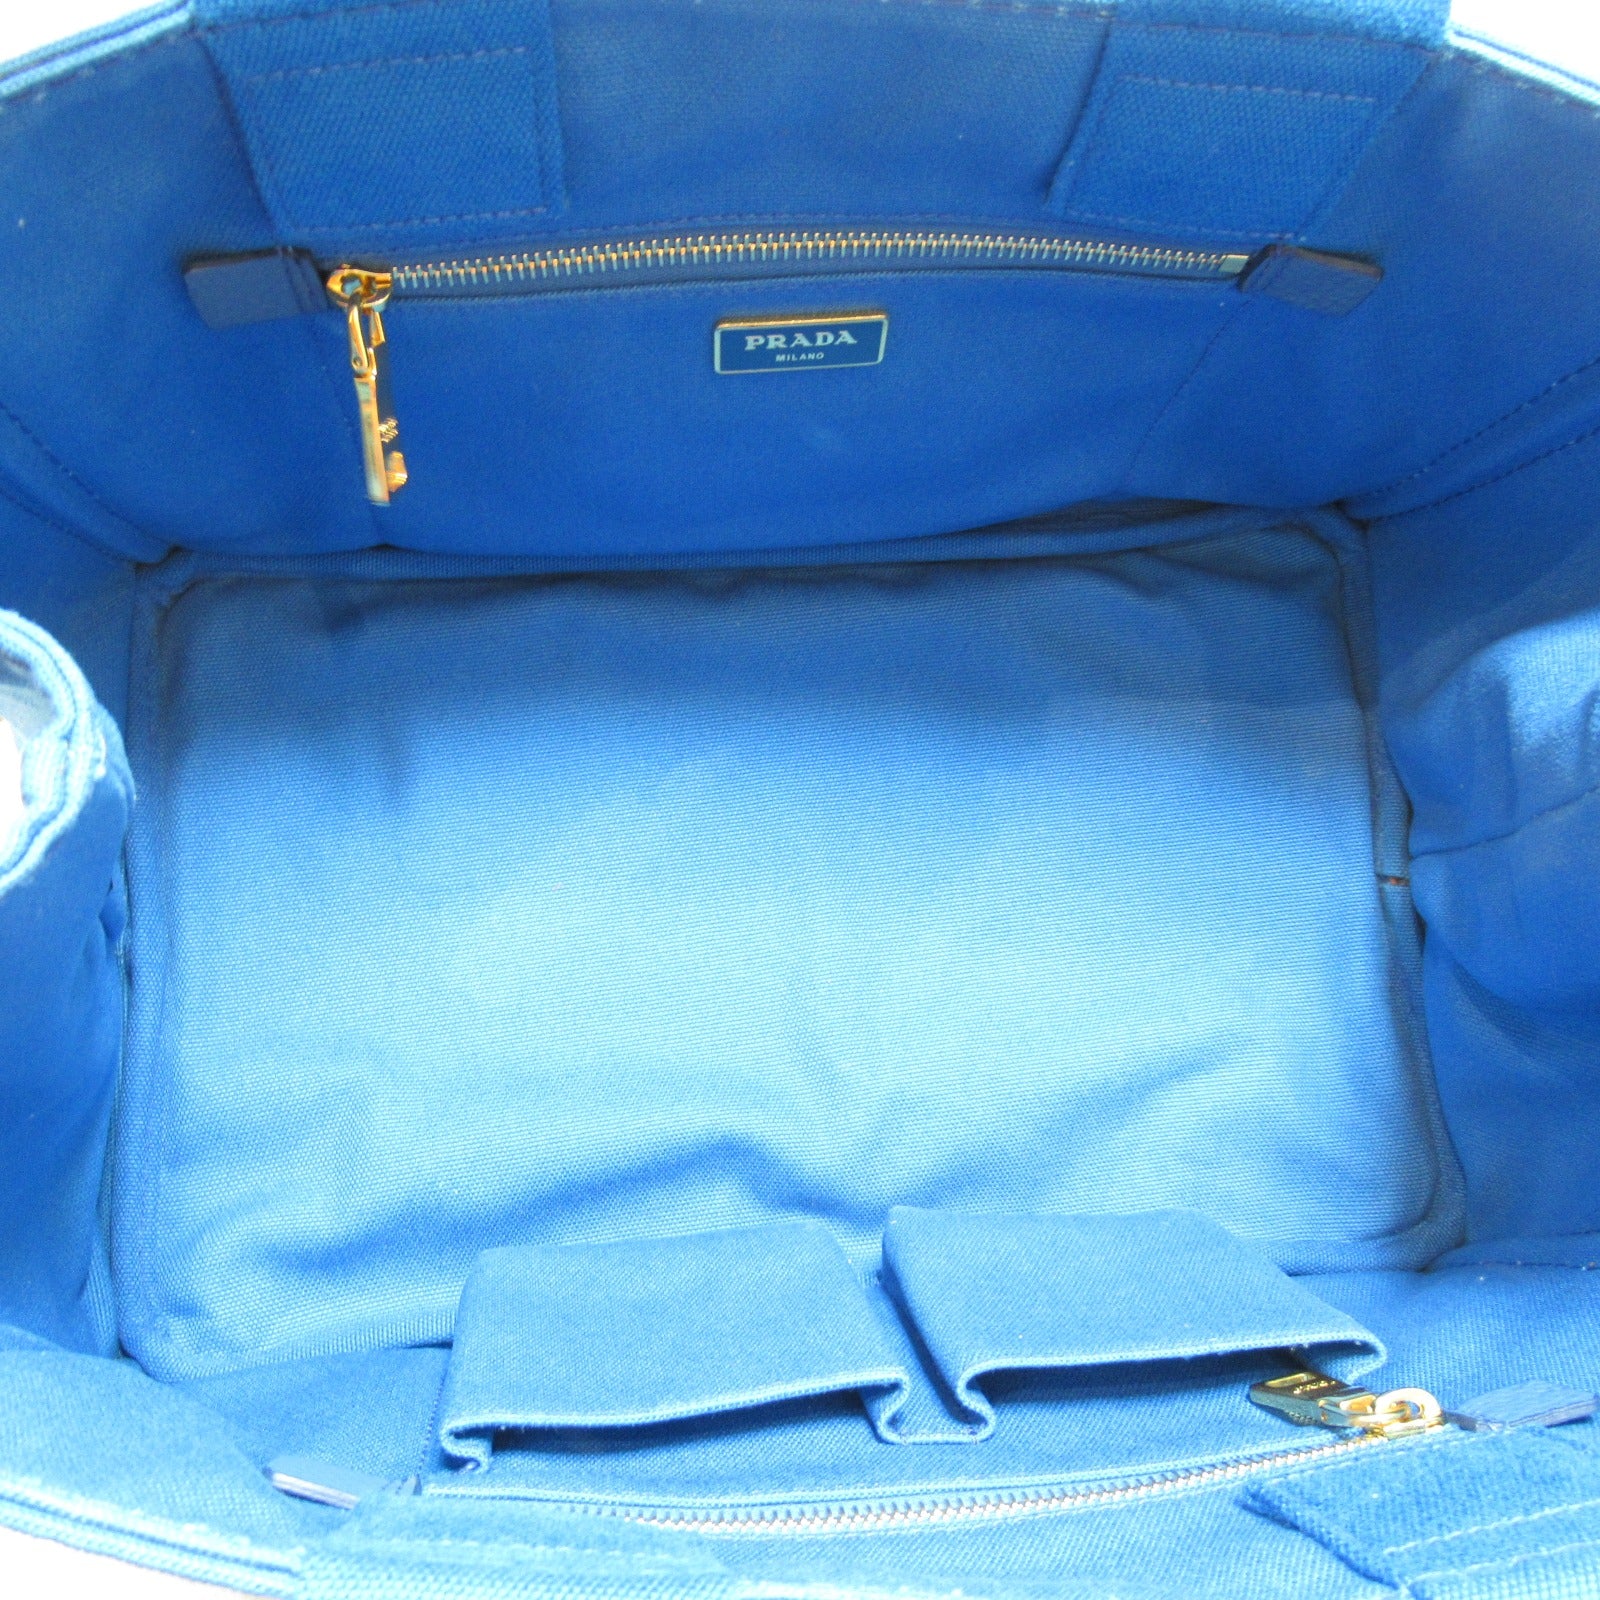 Prada Prada Canapa Tote Bag  Bag  Blue BN1877